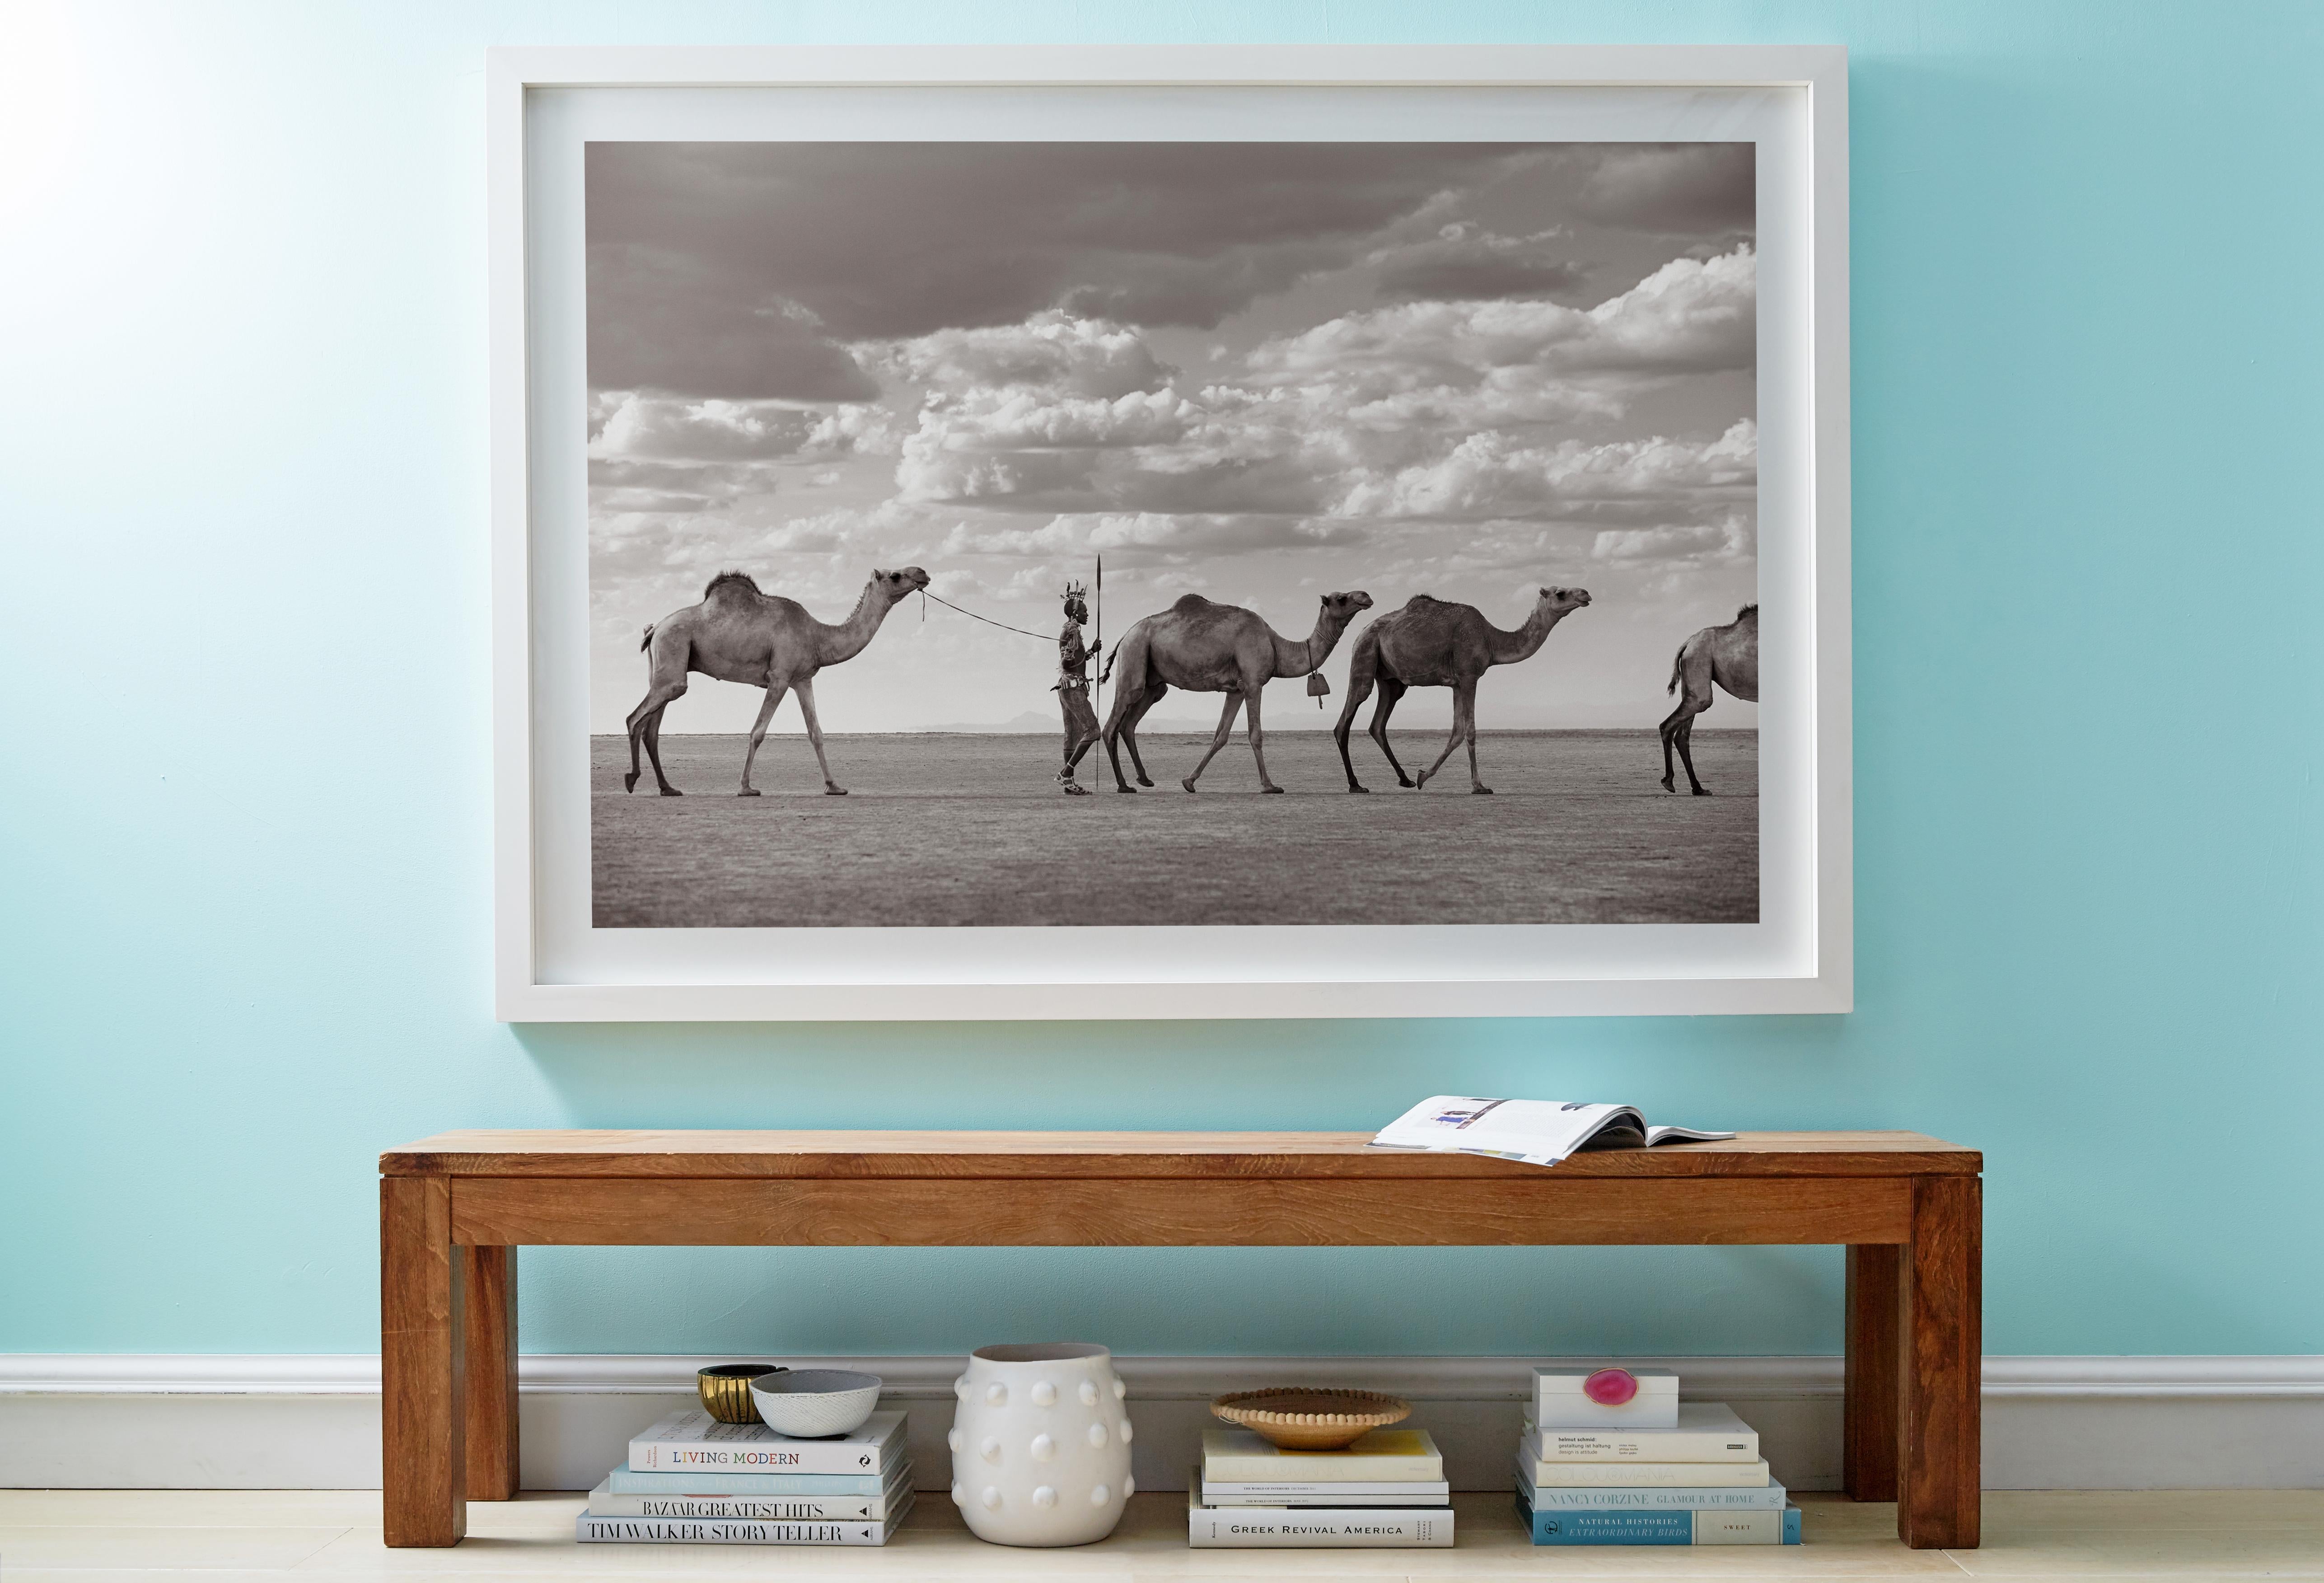 Warrior in Kenya Leading Camels Across Desert, Horizontal, Iconic - Photograph by Drew Doggett